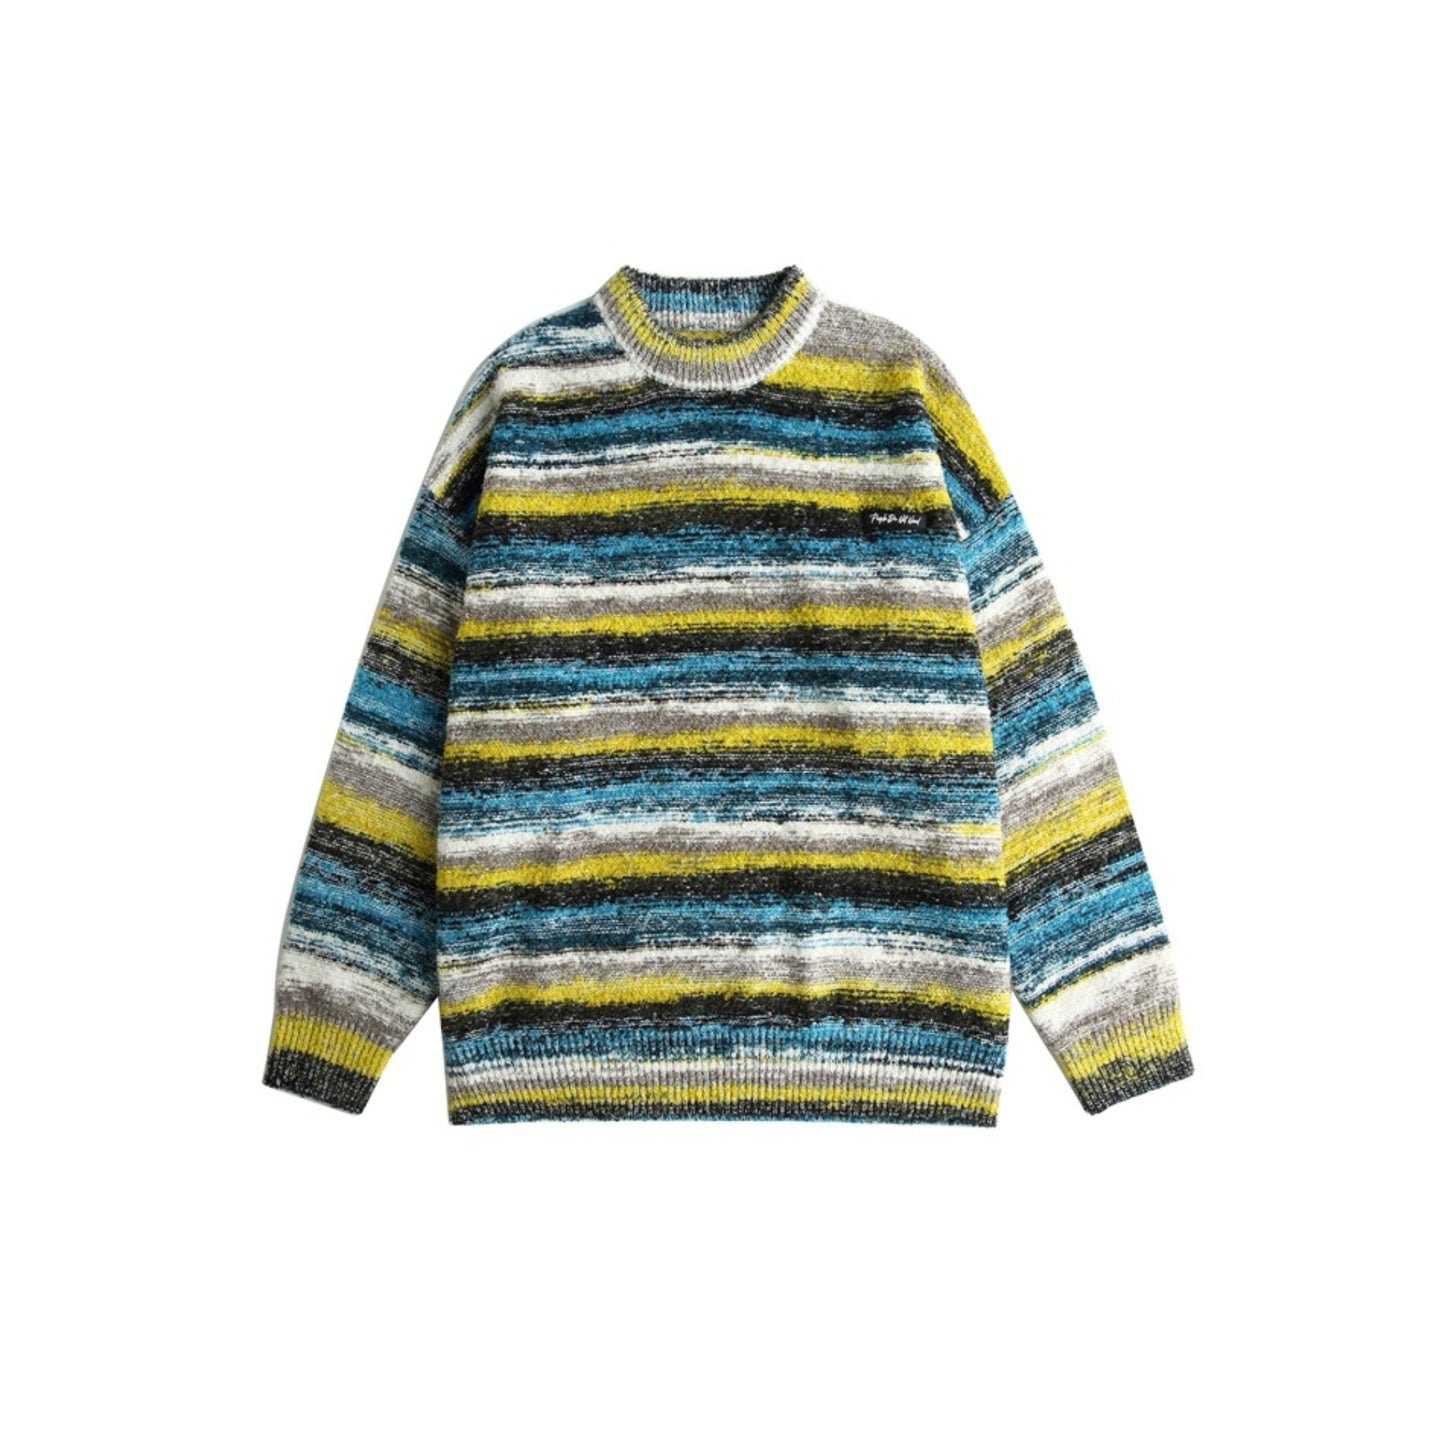 Ethnic Retro Top Striped Sweater